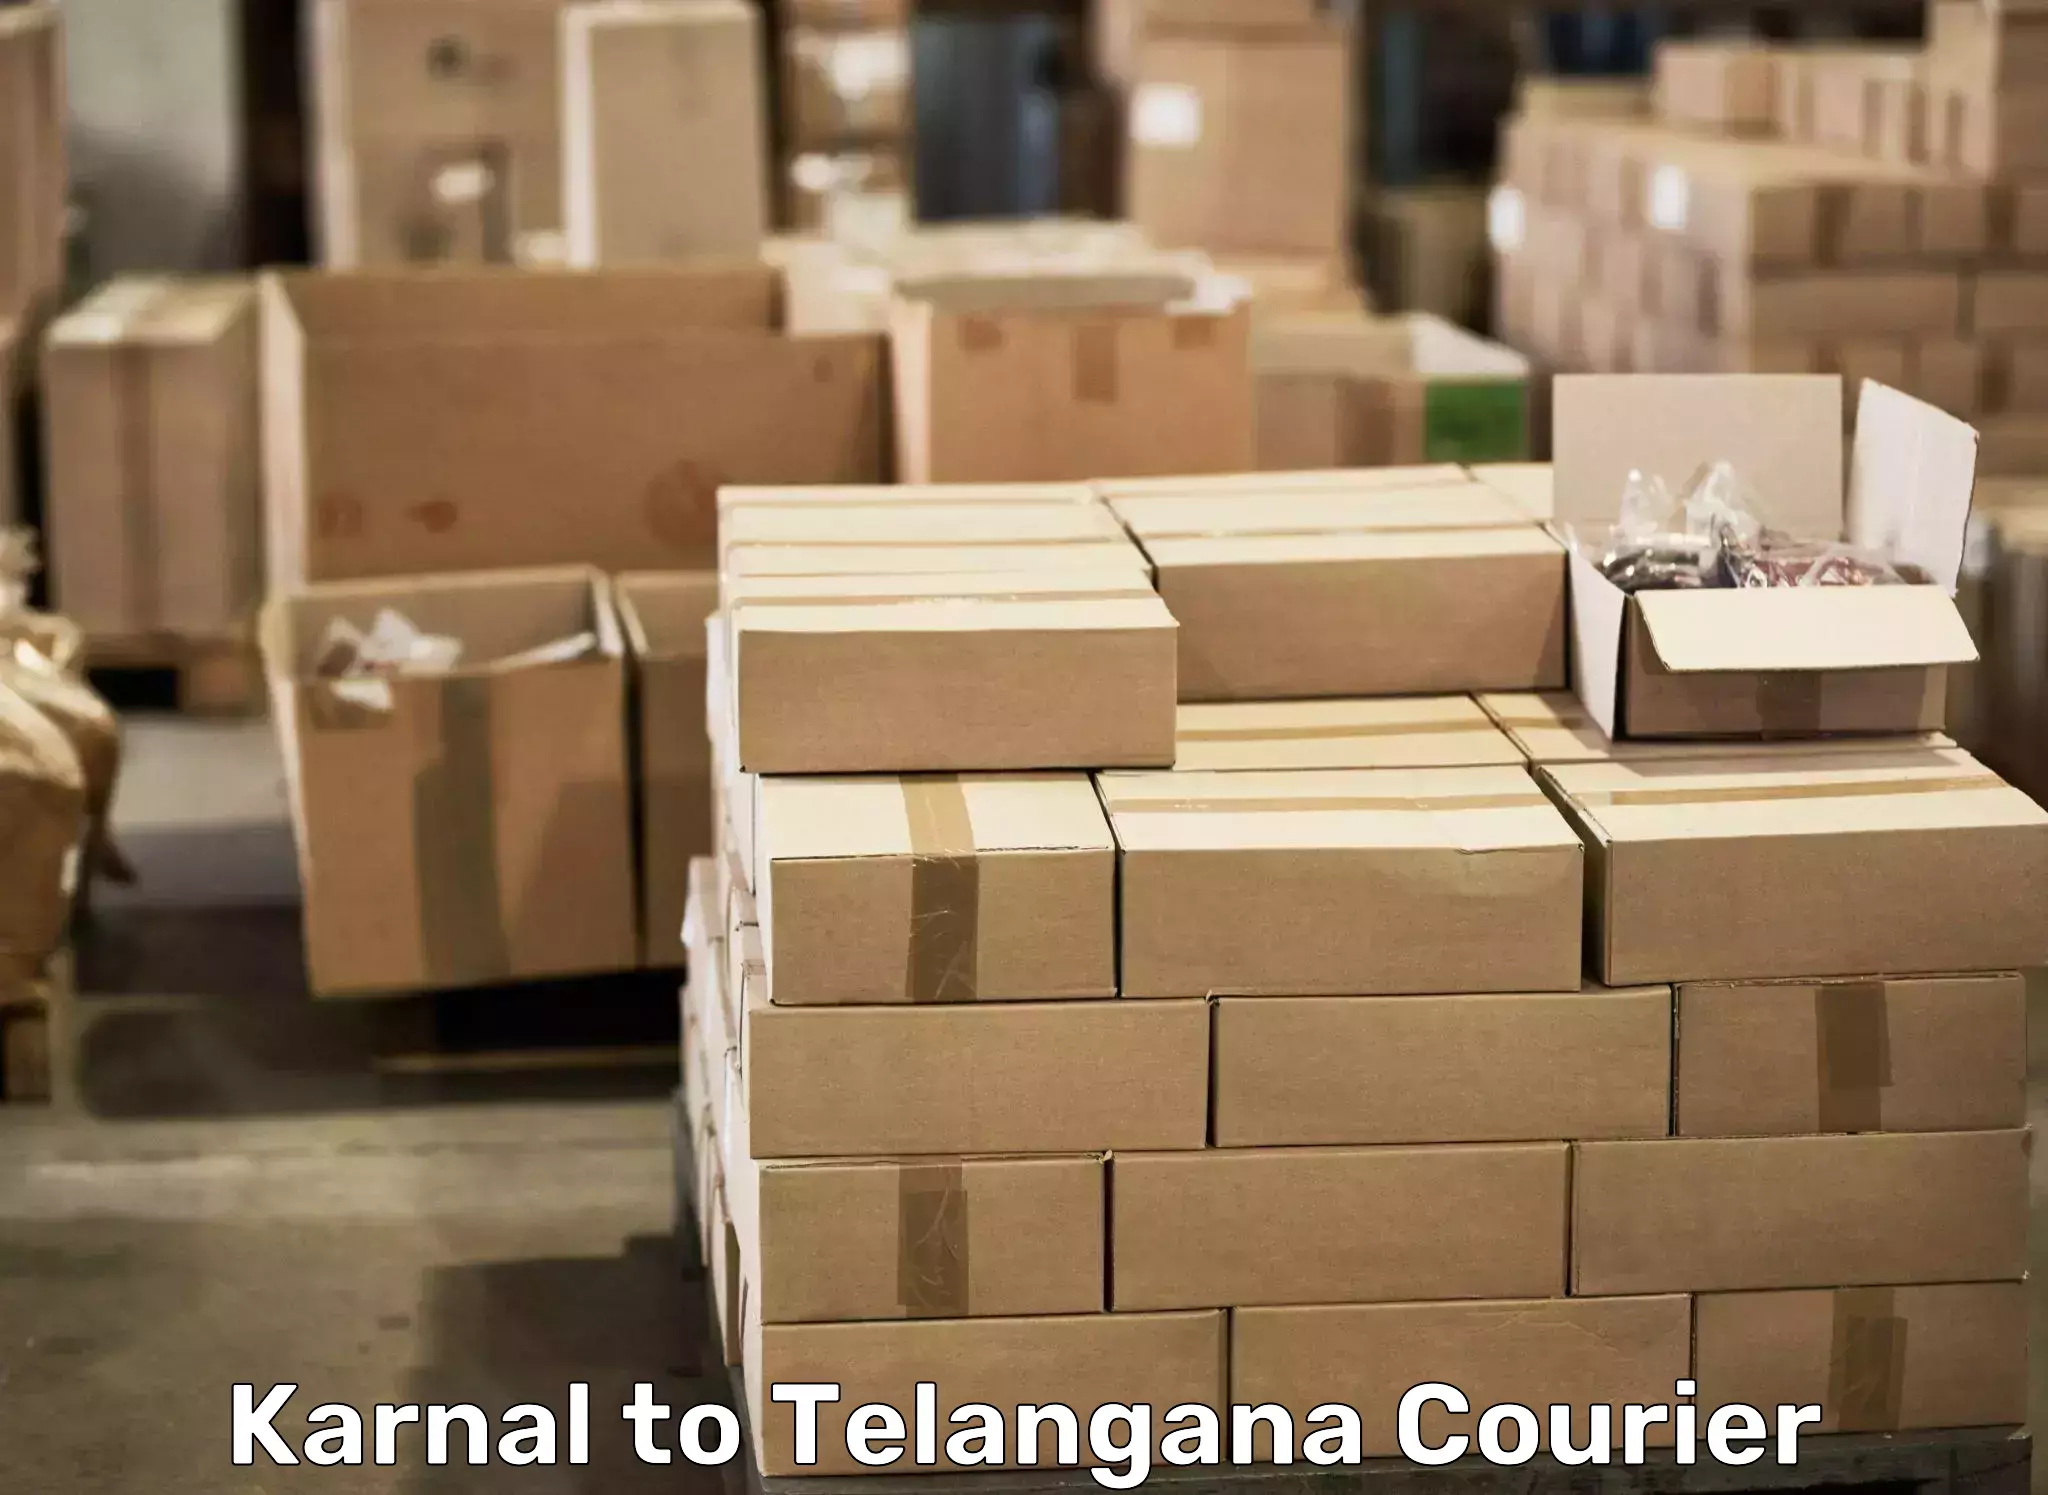 Trusted moving company Karnal to Nalgonda